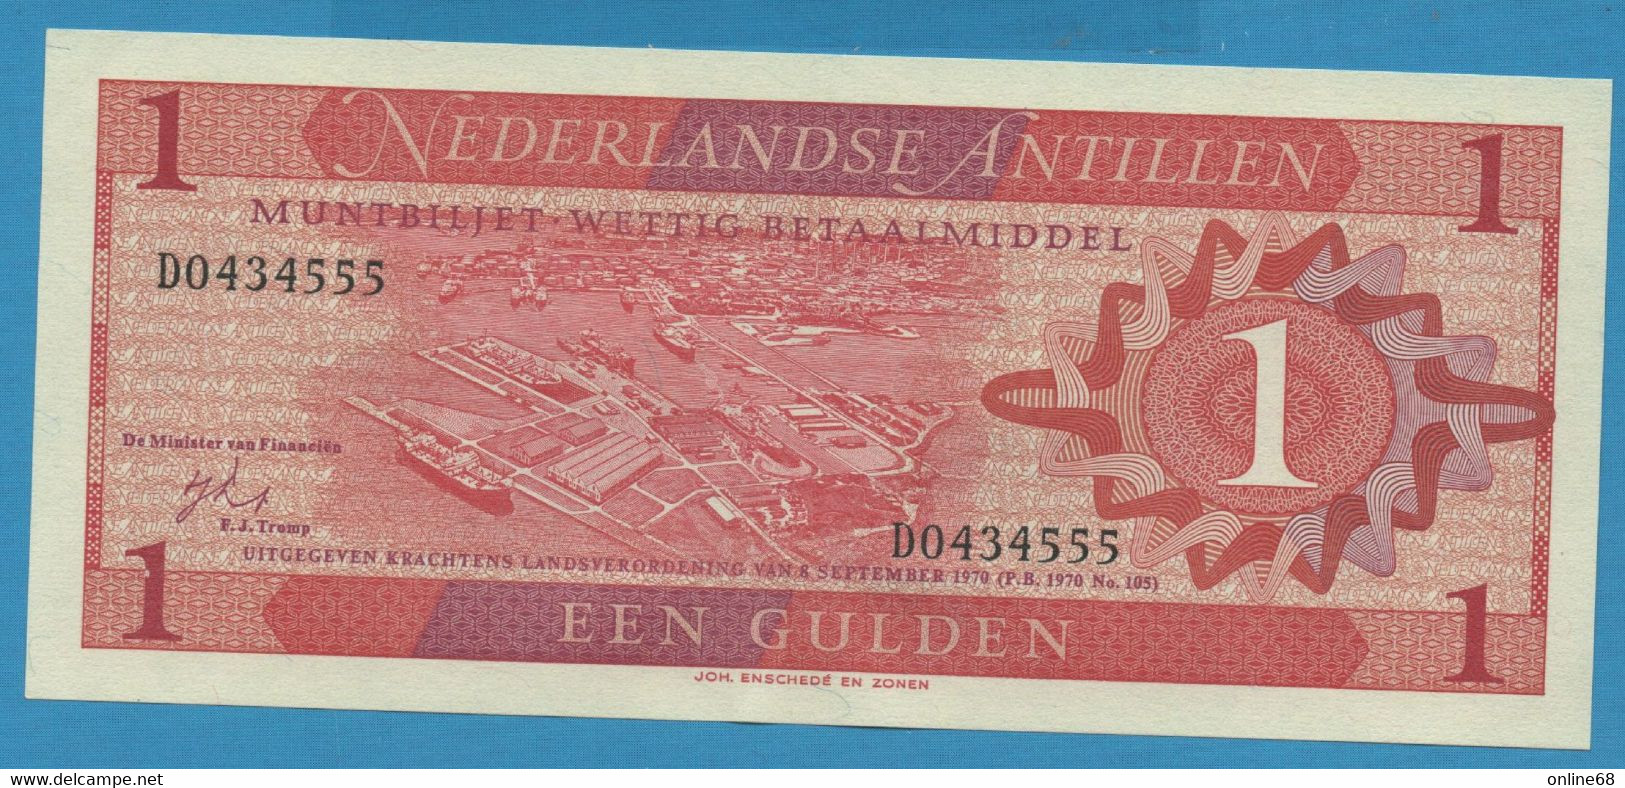 NEDERLANDSE ANTILLEN 1 GULDEN 08.09.1970 # D0434555 P# 20 Willemstad Curaçao - Antille Olandesi (...-1986)